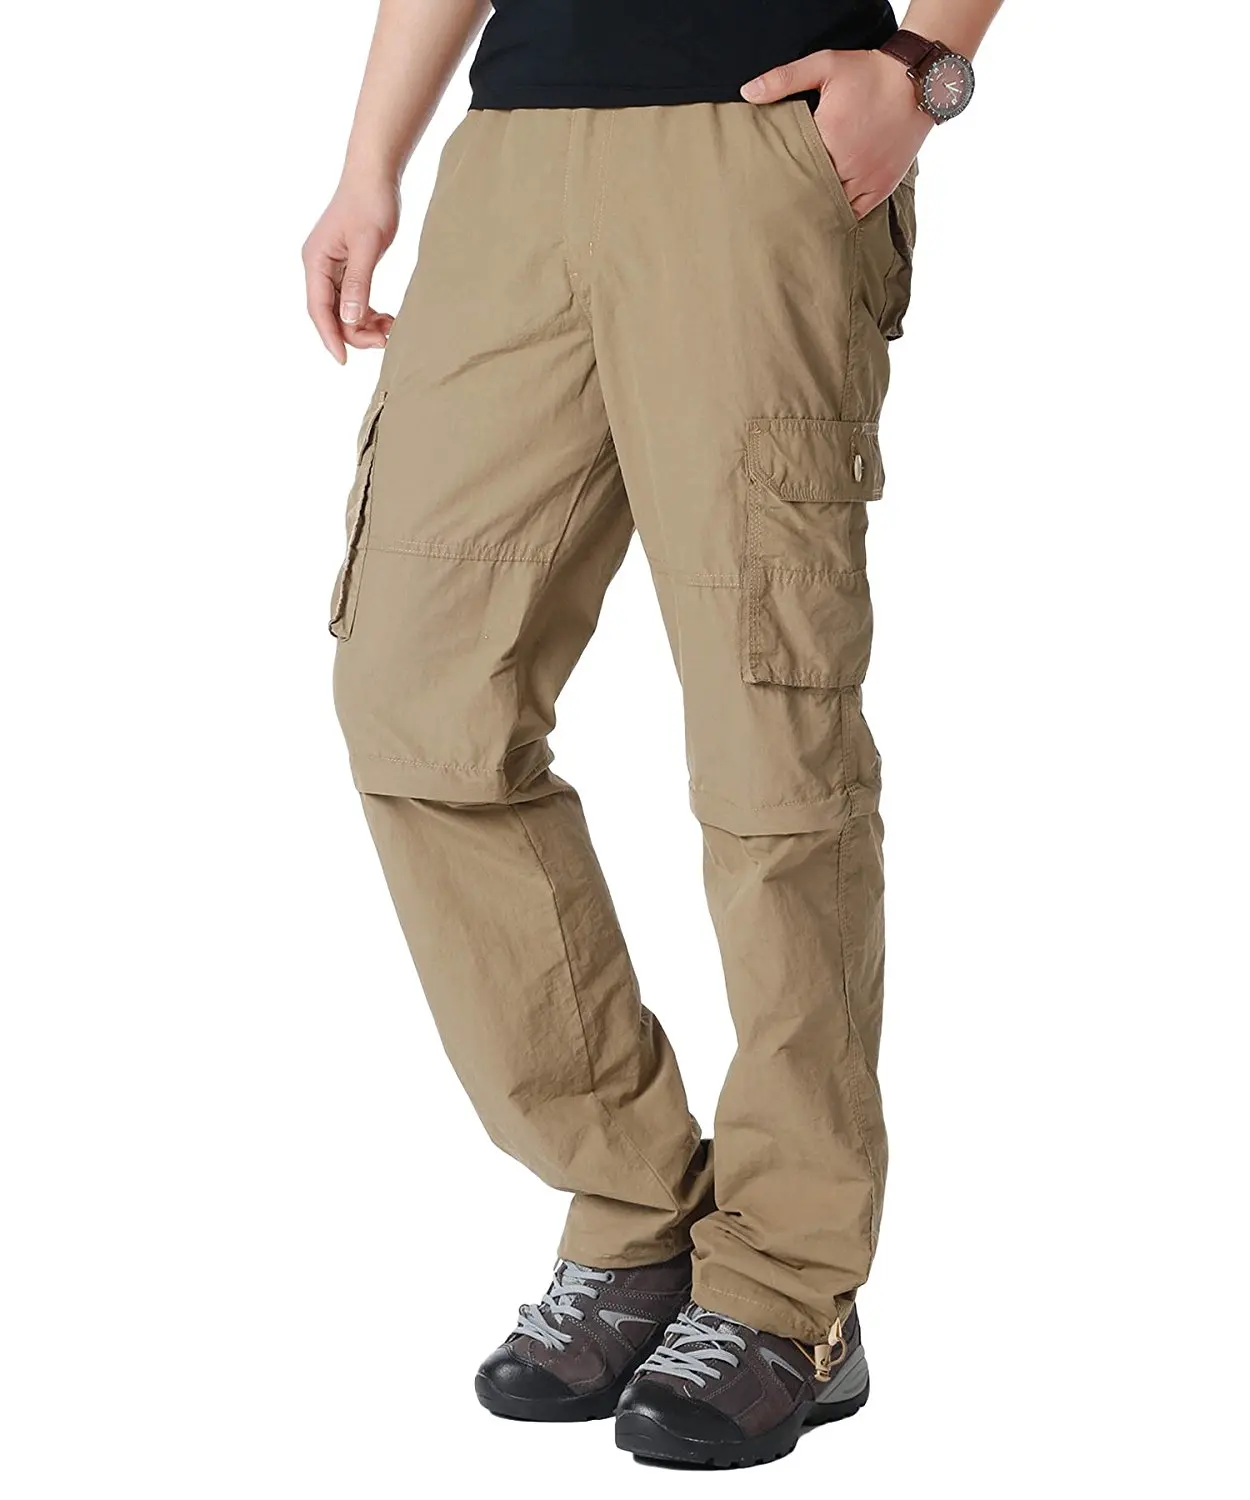 Buy EKLENTSON Mens Quick Dry Convertible Pants Zip-Off Hiking Camping ...